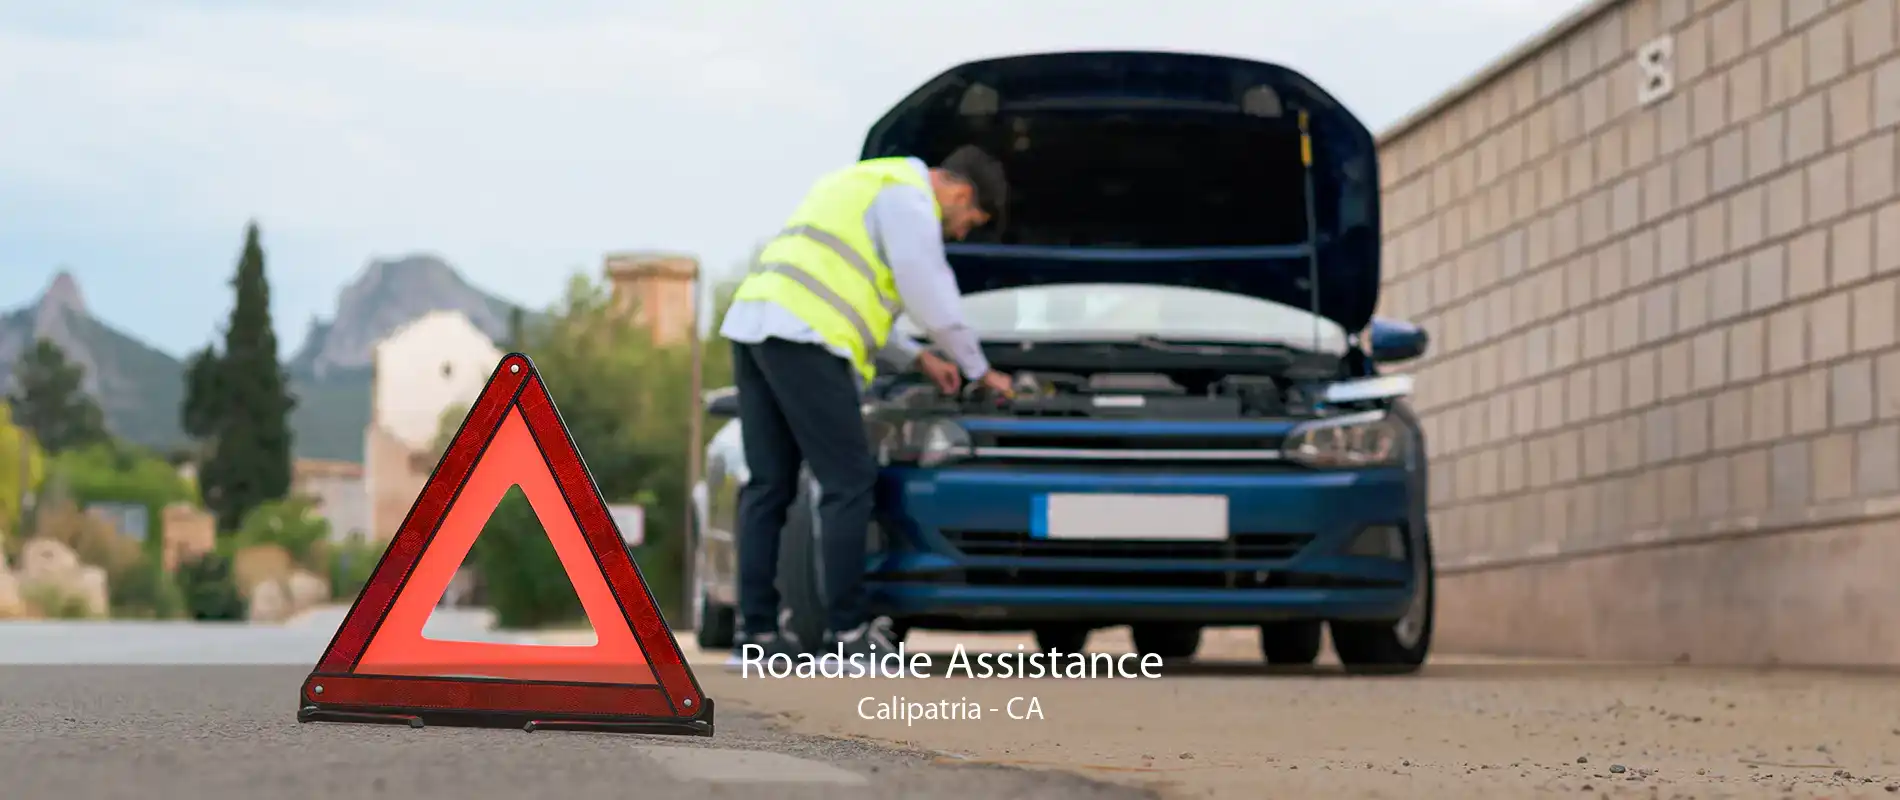 Roadside Assistance Calipatria - CA